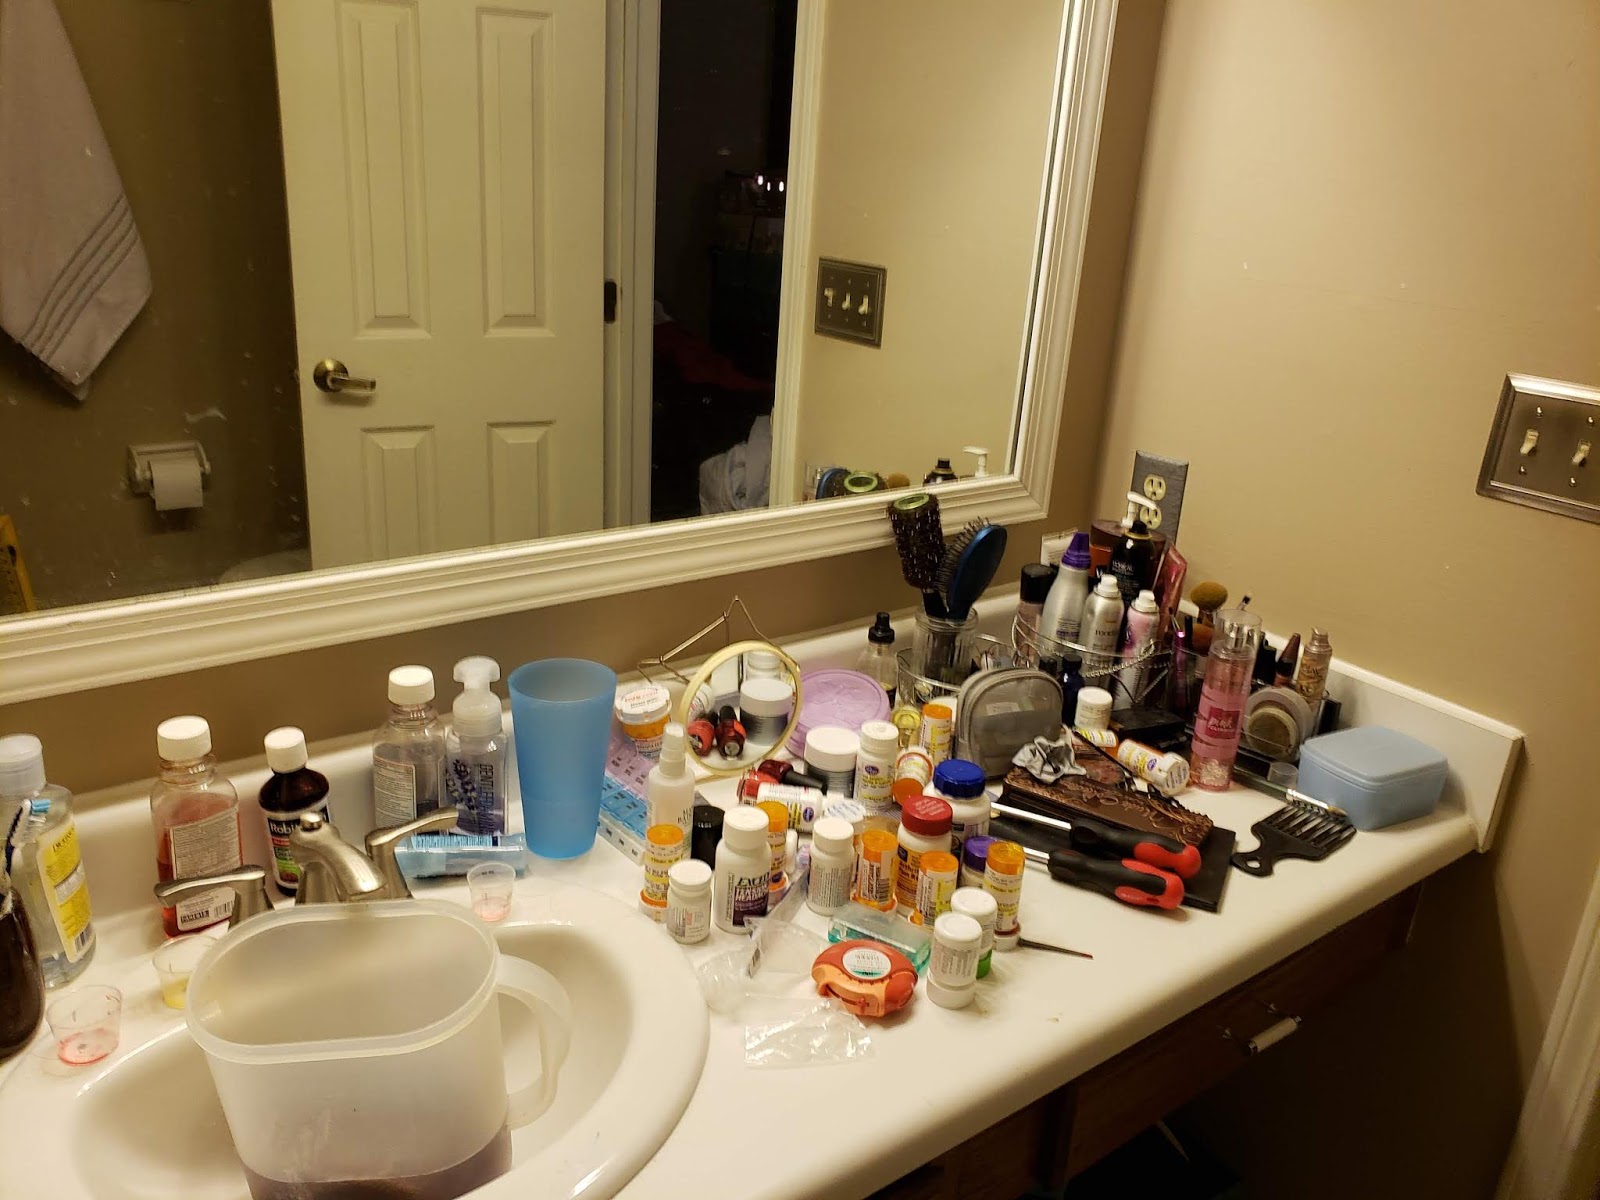 Unorganized bathroom